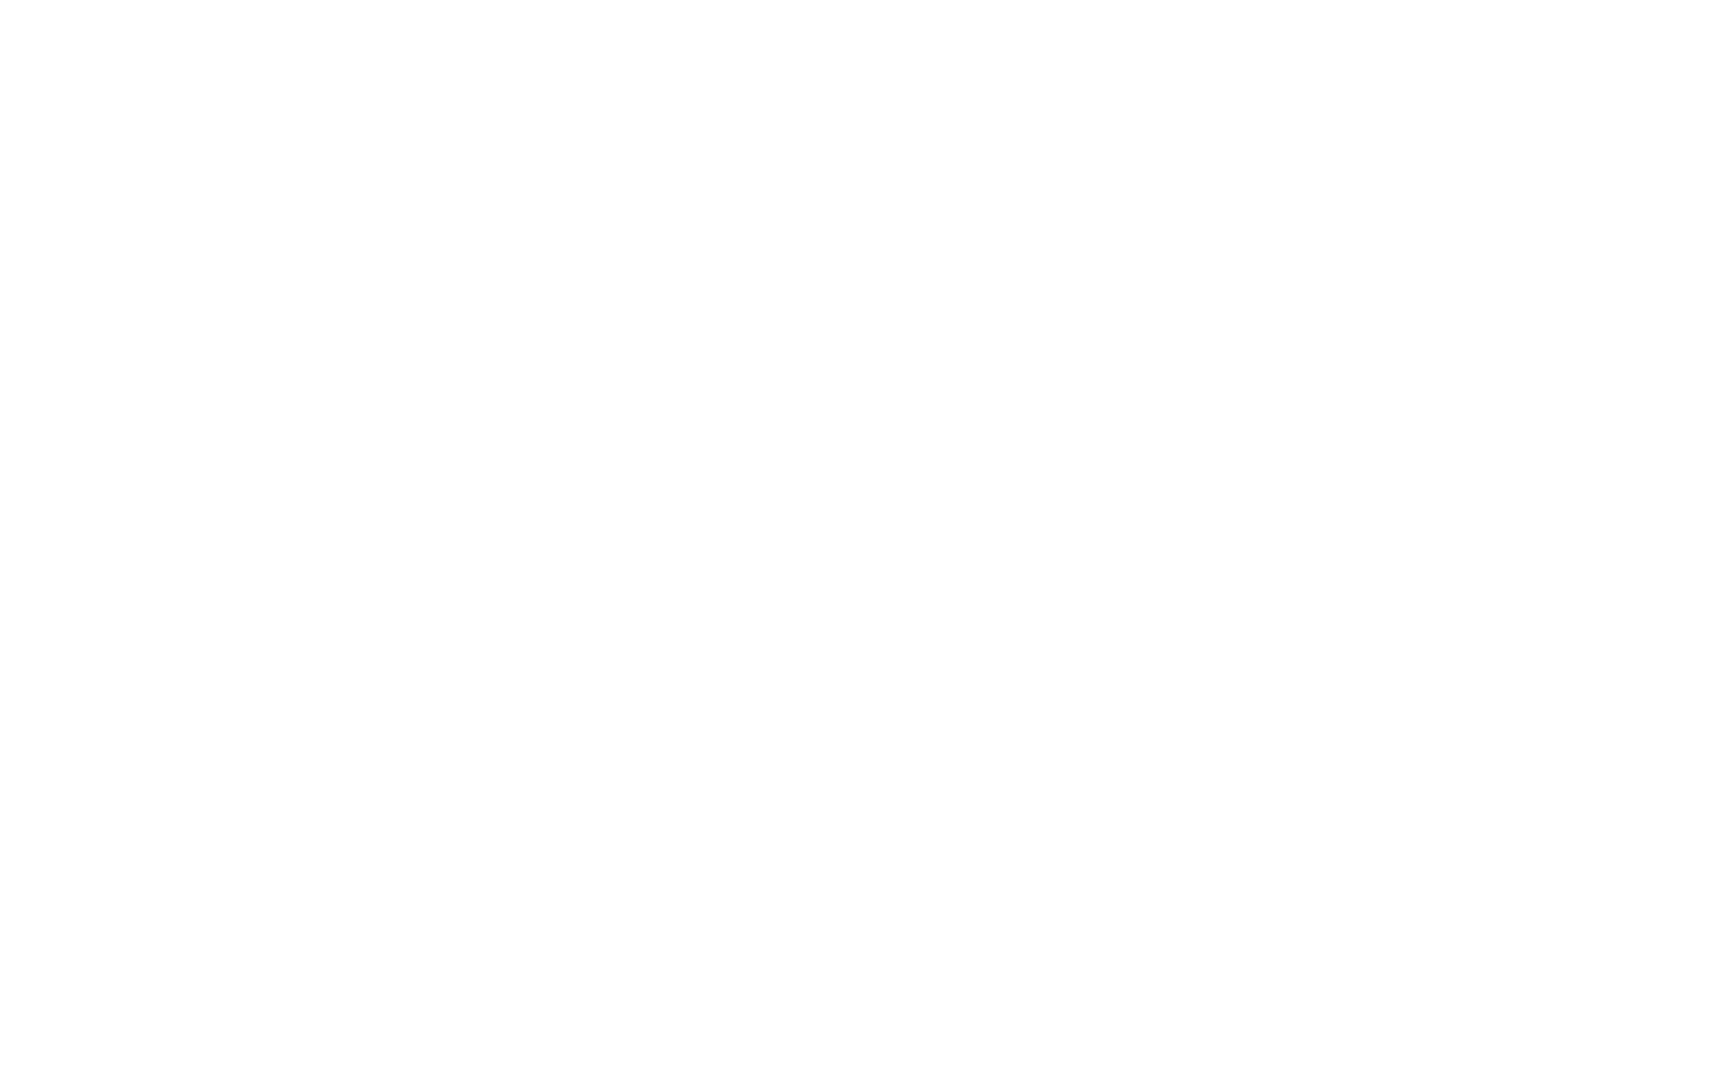 Common Sense Conferences | High value conferences for innovators